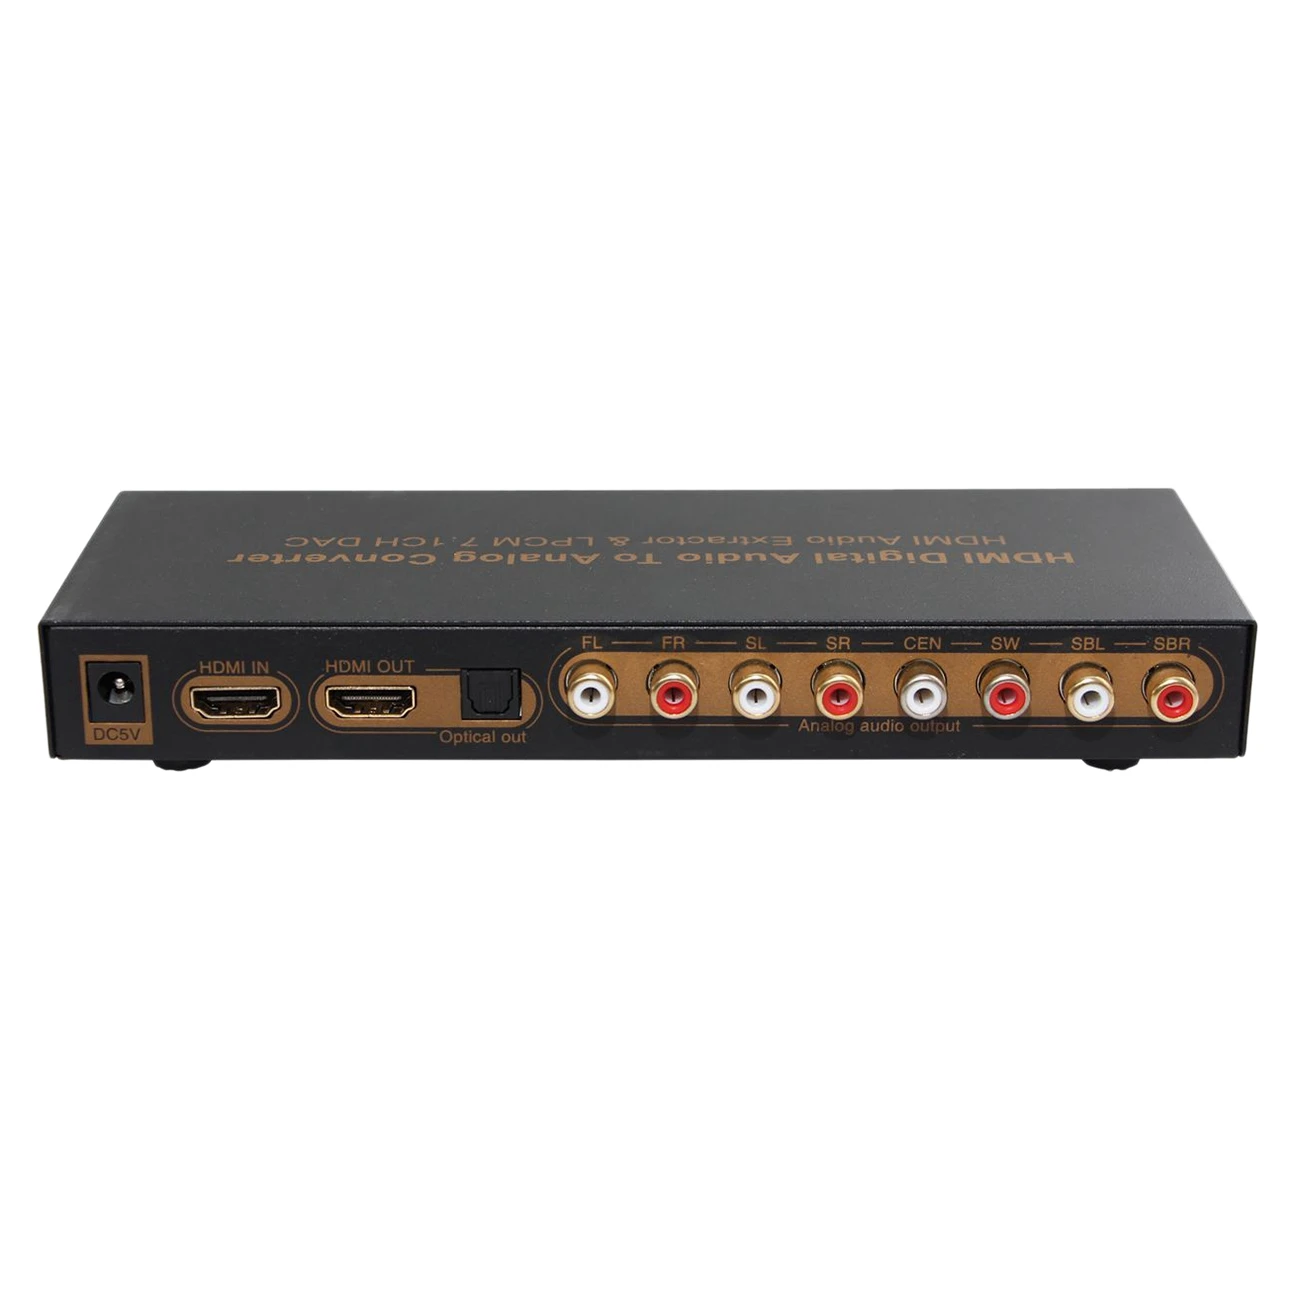 

LPCM HDMI-Compatible TO 7.1 Audio Converter HDMI-Compatible Audio Splitter Optical RCA Output EU Plug